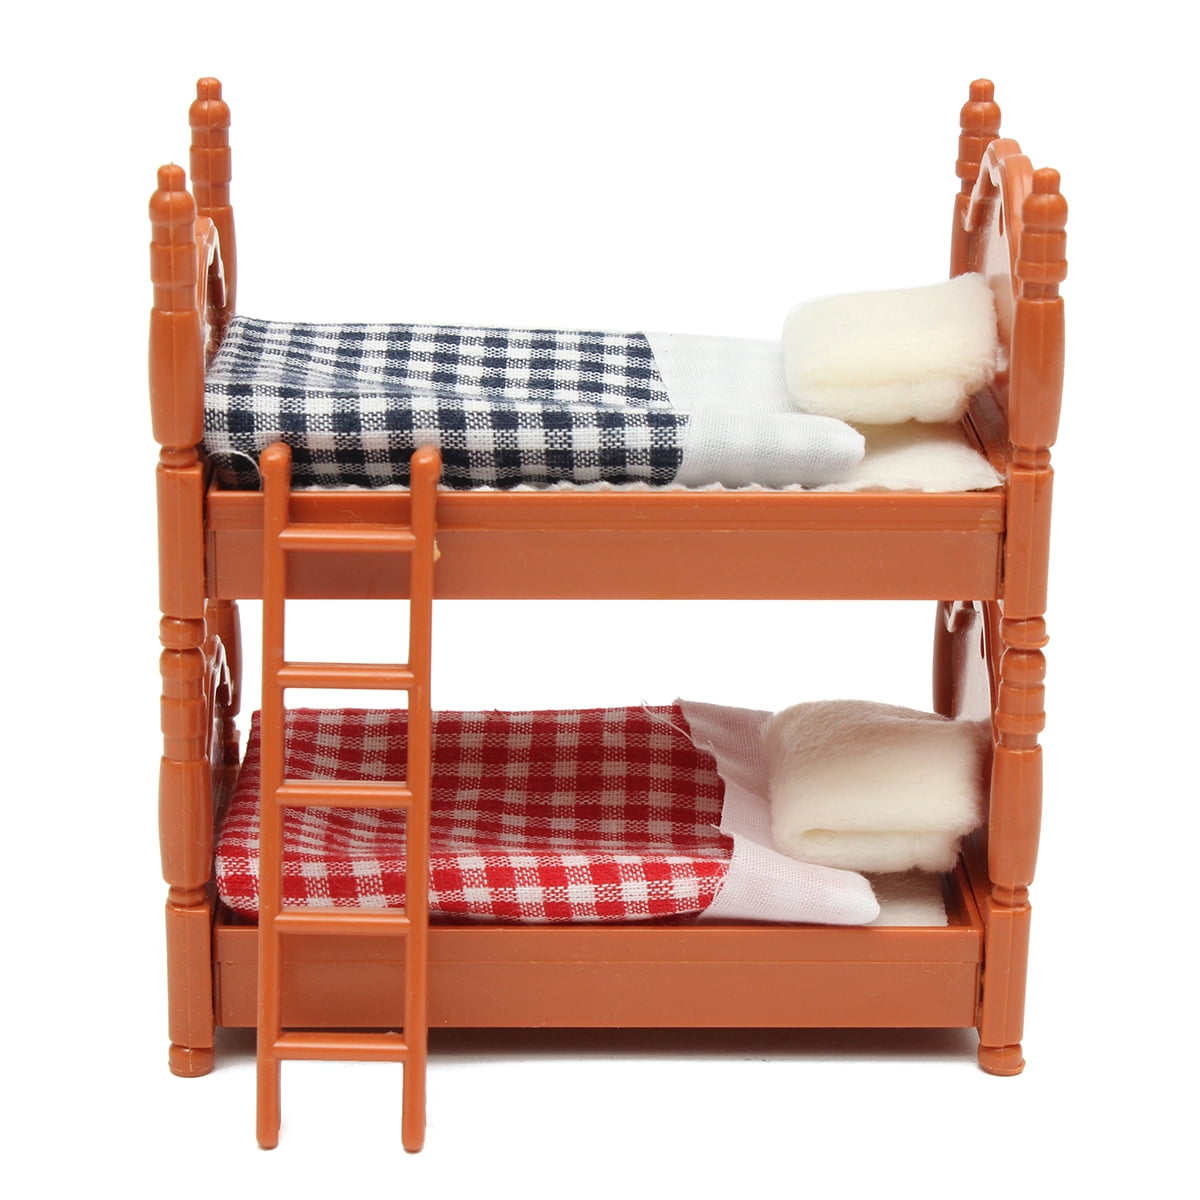 Dollhouse Furniture Sets Miniature, Camas Y Muebles Monterrey Bunk Bed Instructions